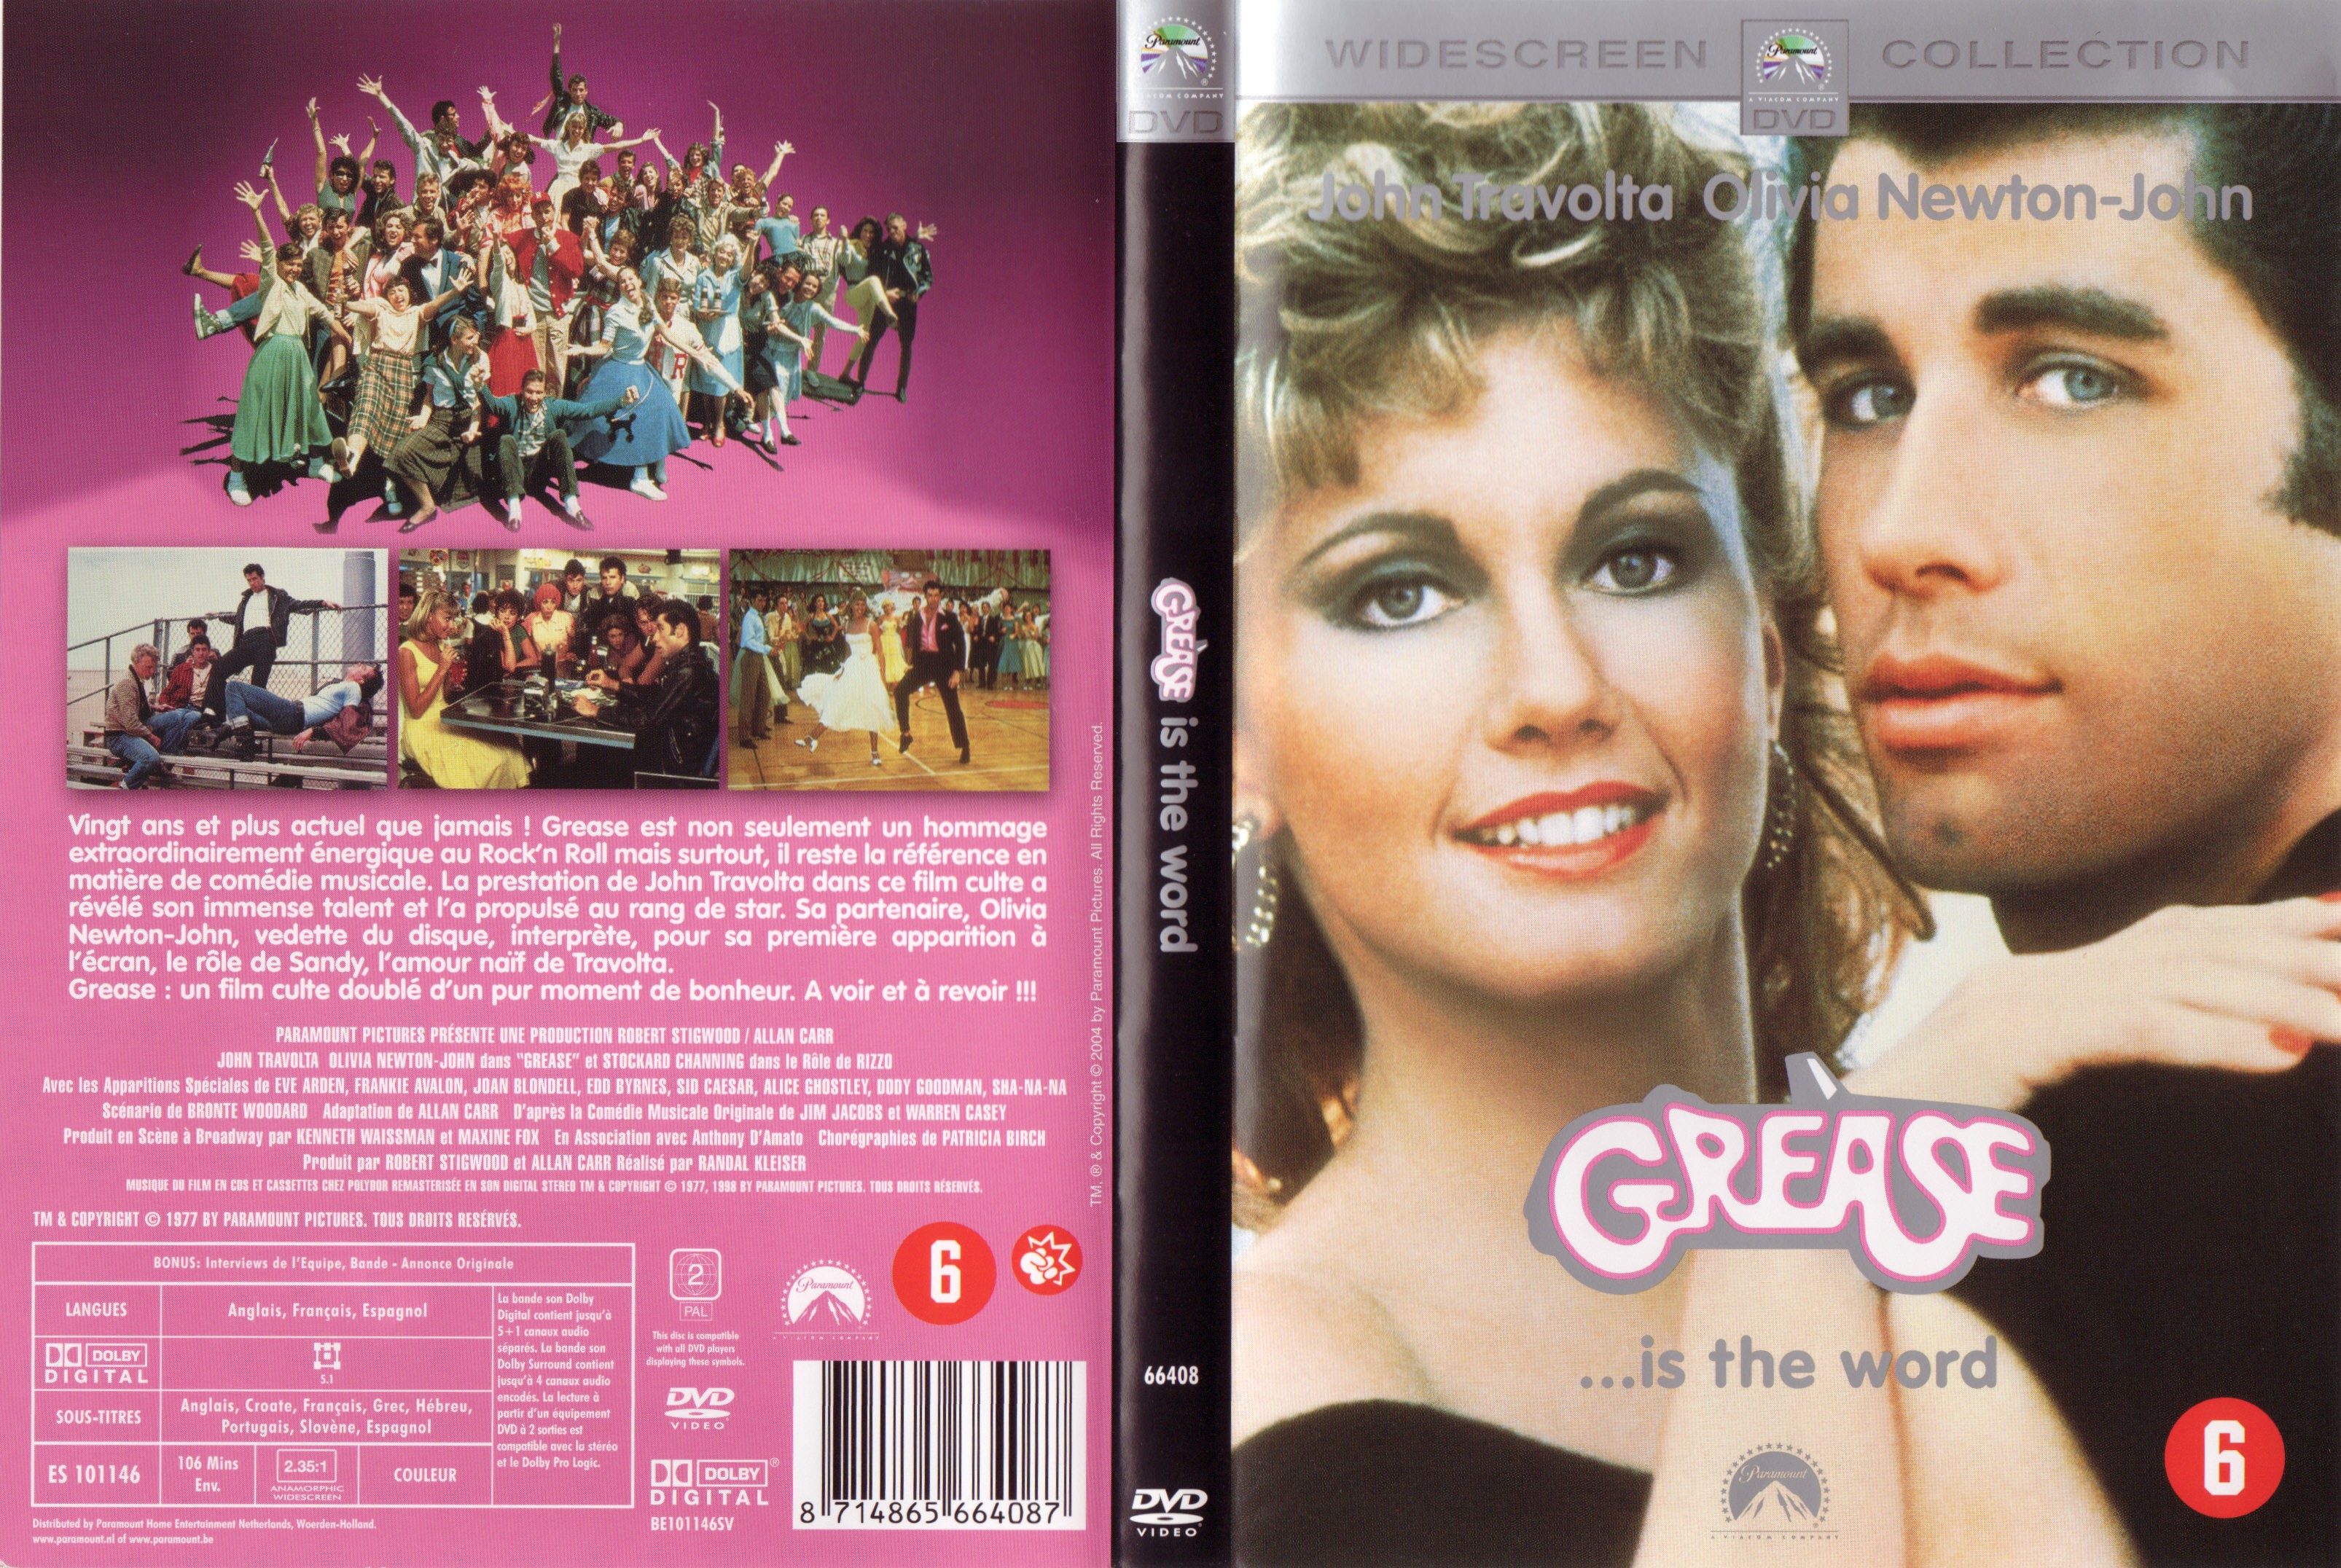 Jaquette DVD Grease v2